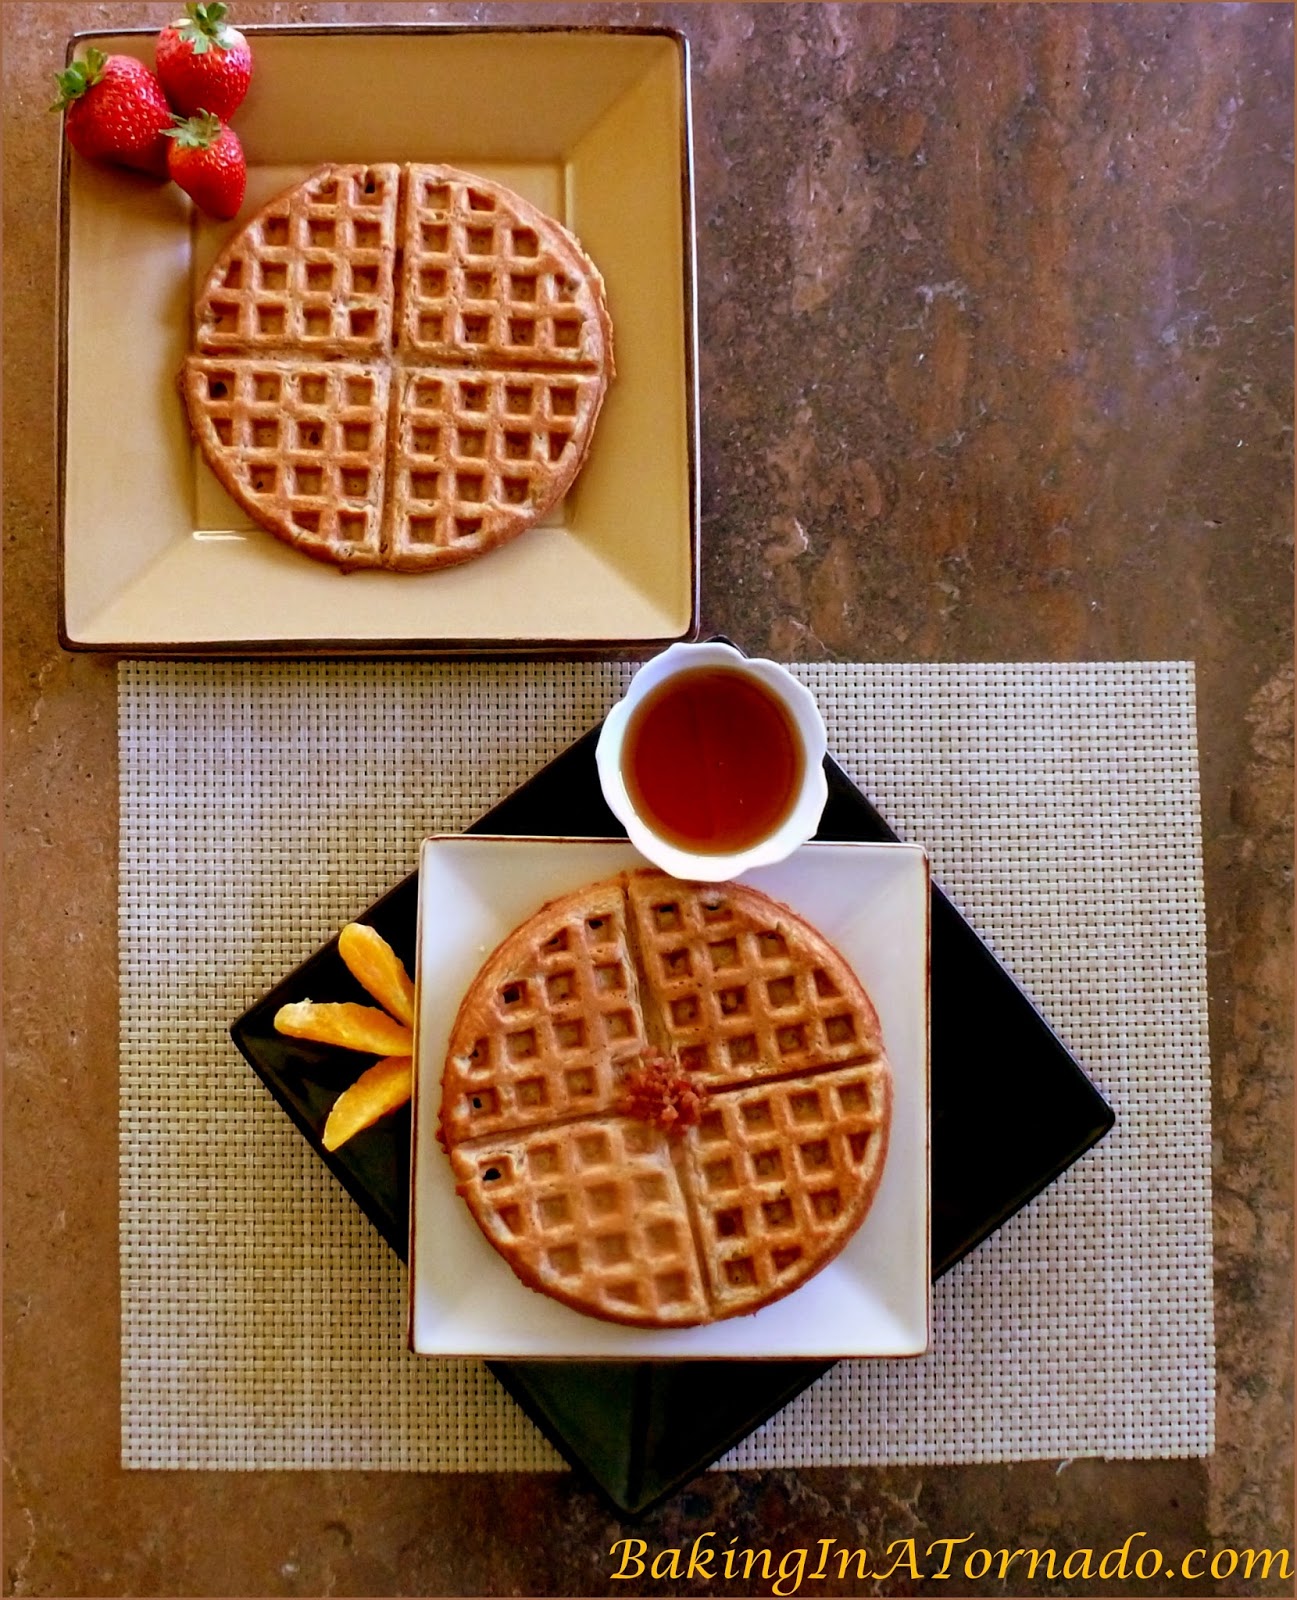 Coffee-Flavored Belgian Waffles Recipe